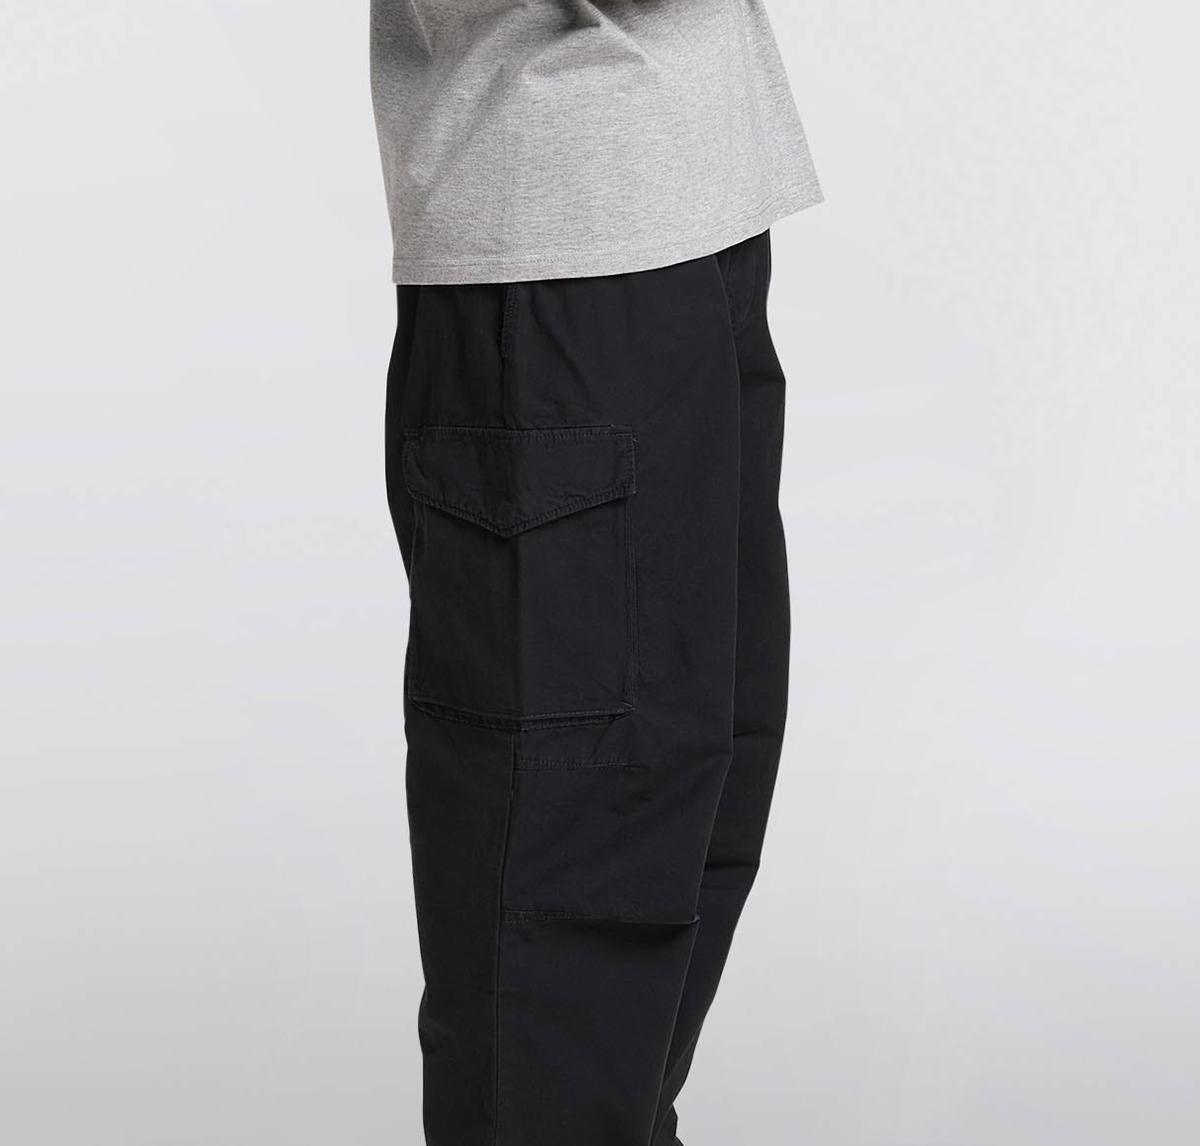 EDWIN Squad Pant - Rip Stop - Black Garment Dyed side detail